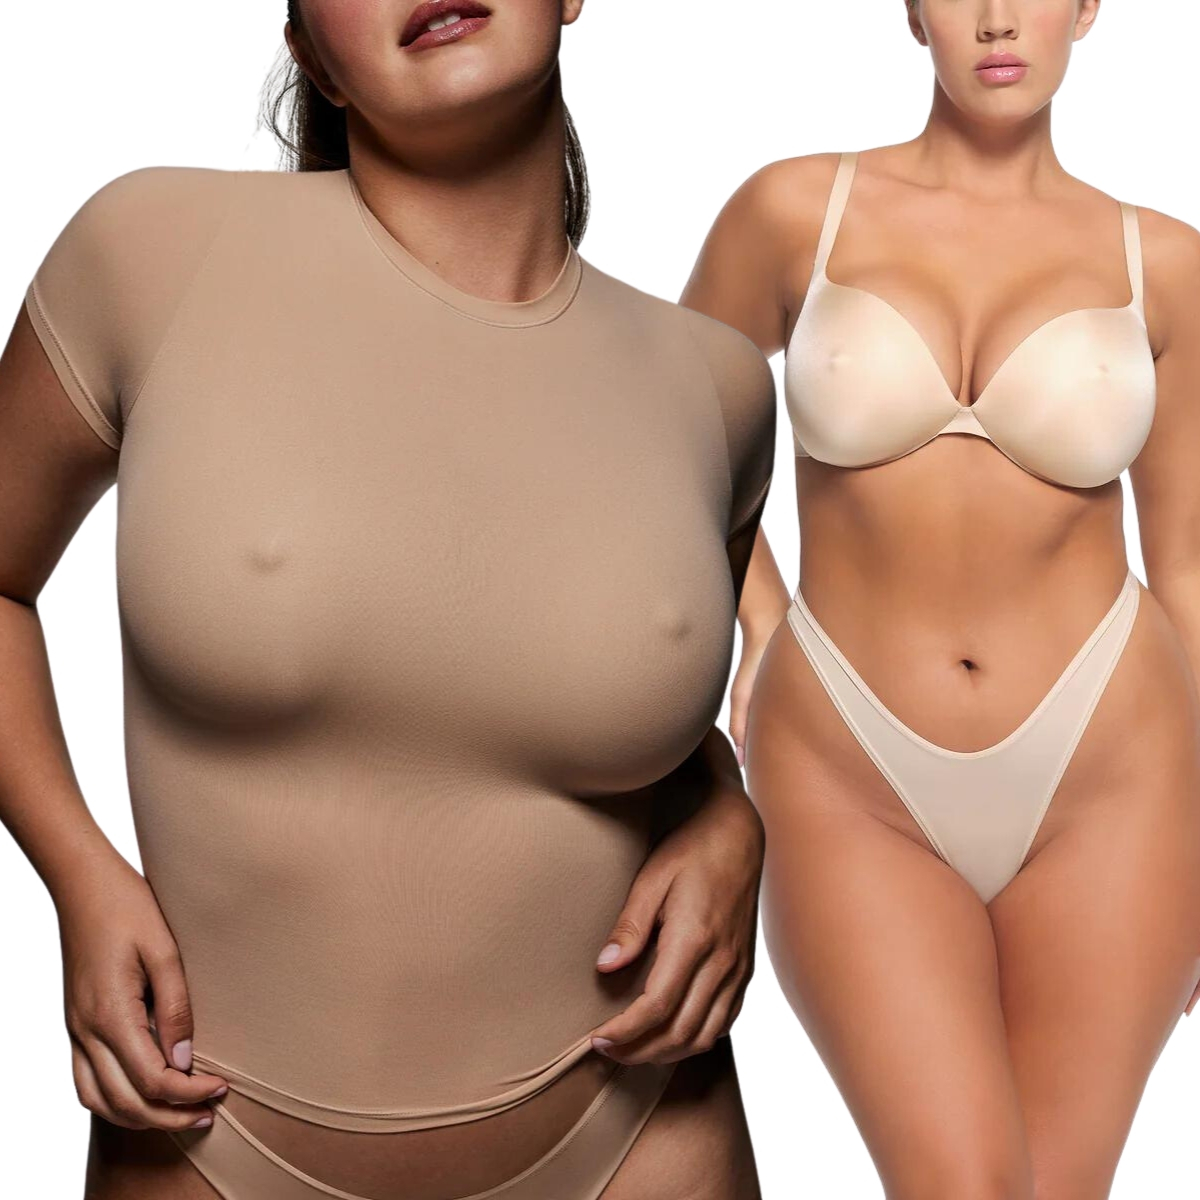 Why Kim Kardashian’s SKIMS Nipple Bra Is a Genius Idea